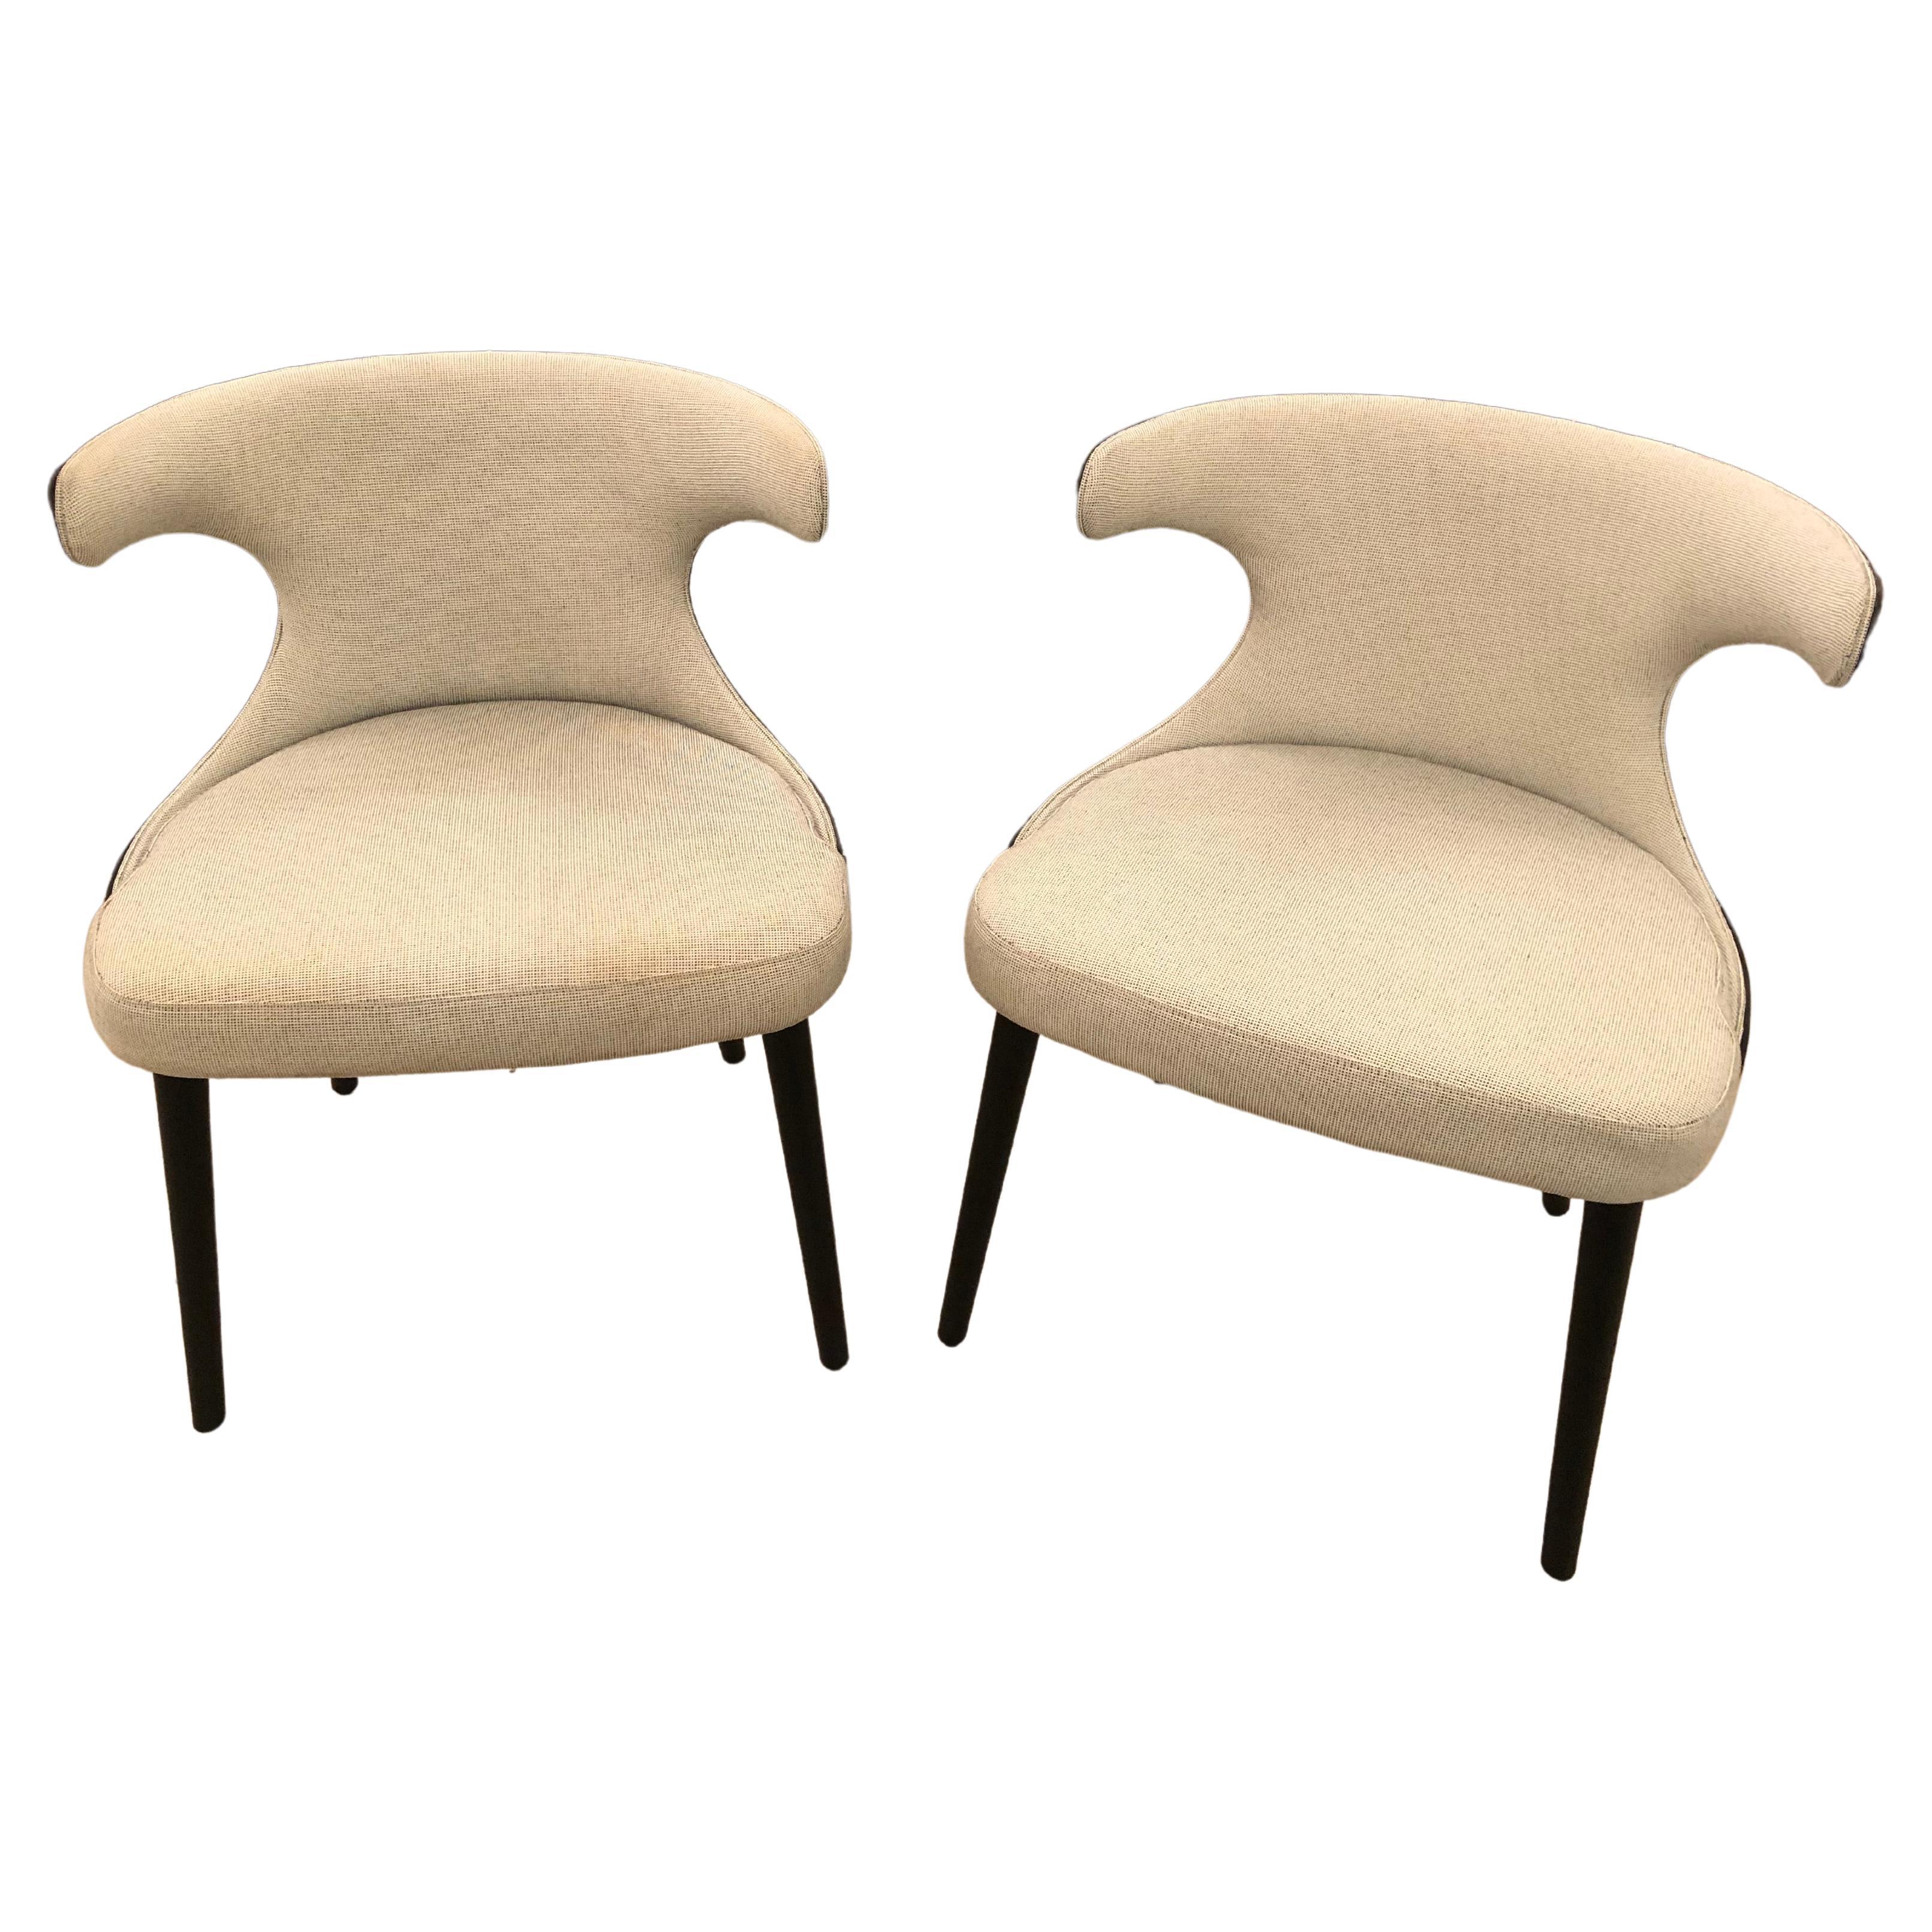 Super Chic Sculptural Pair of Italian Chairs